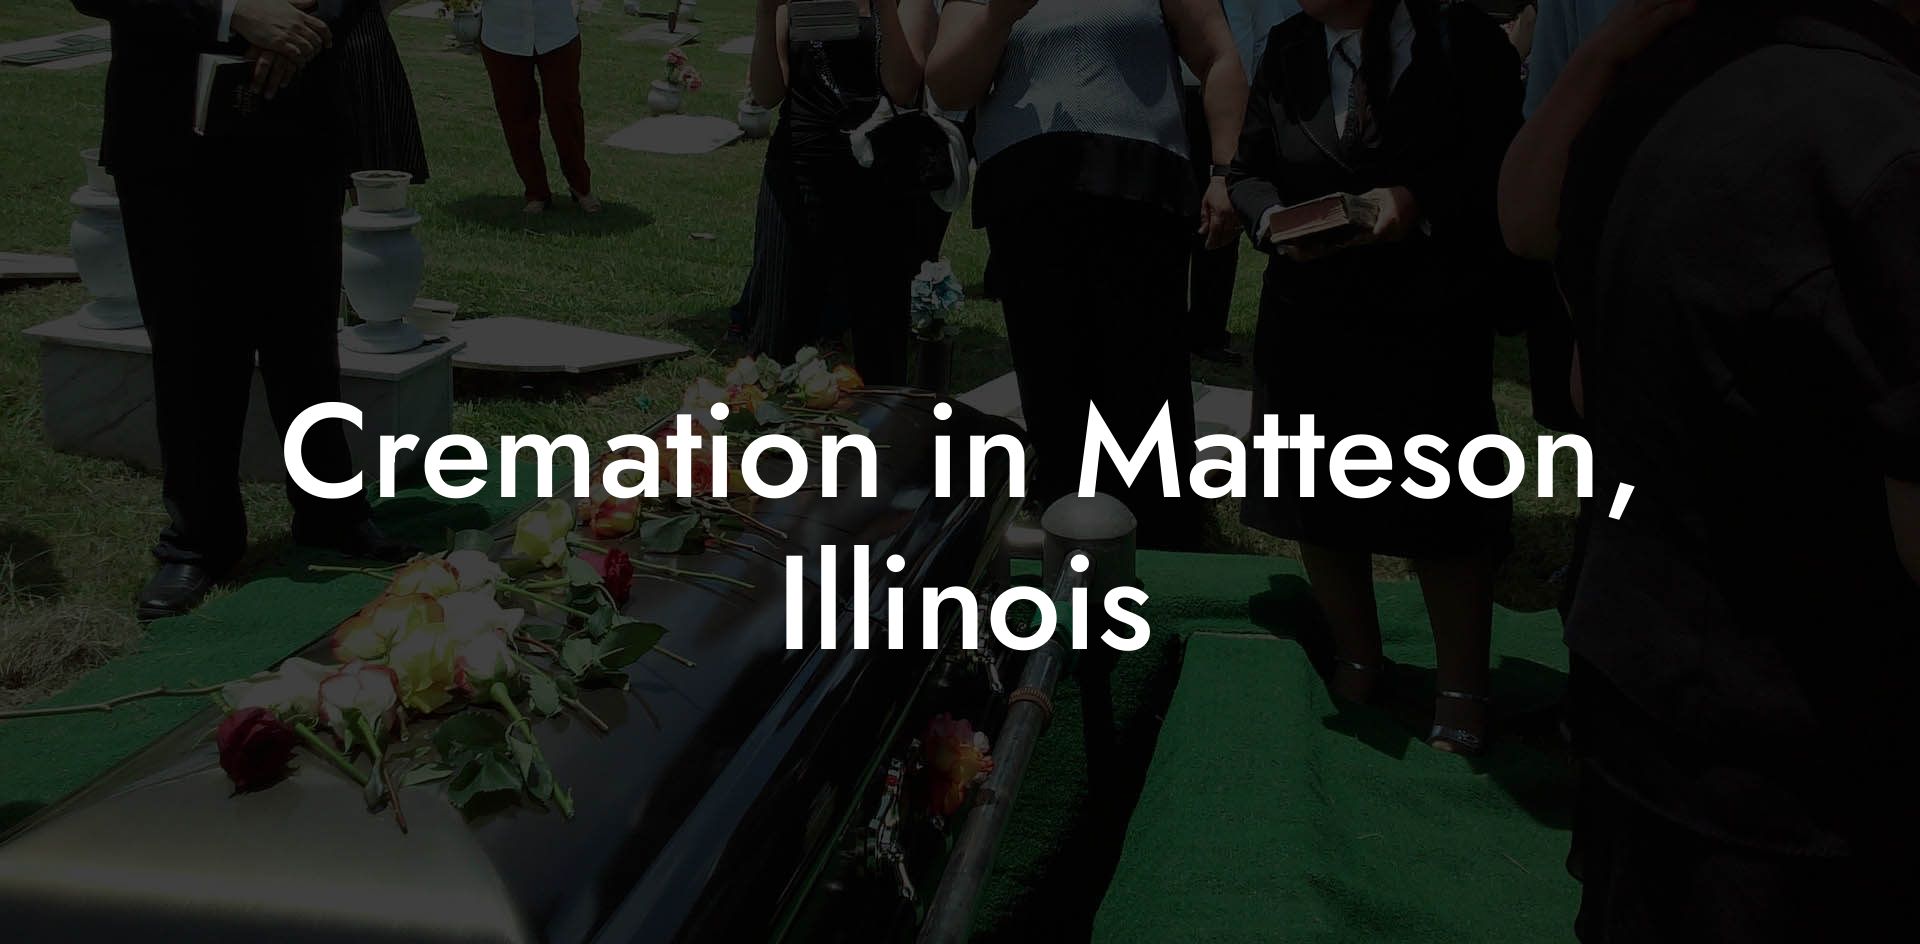 Cremation in Matteson, Illinois